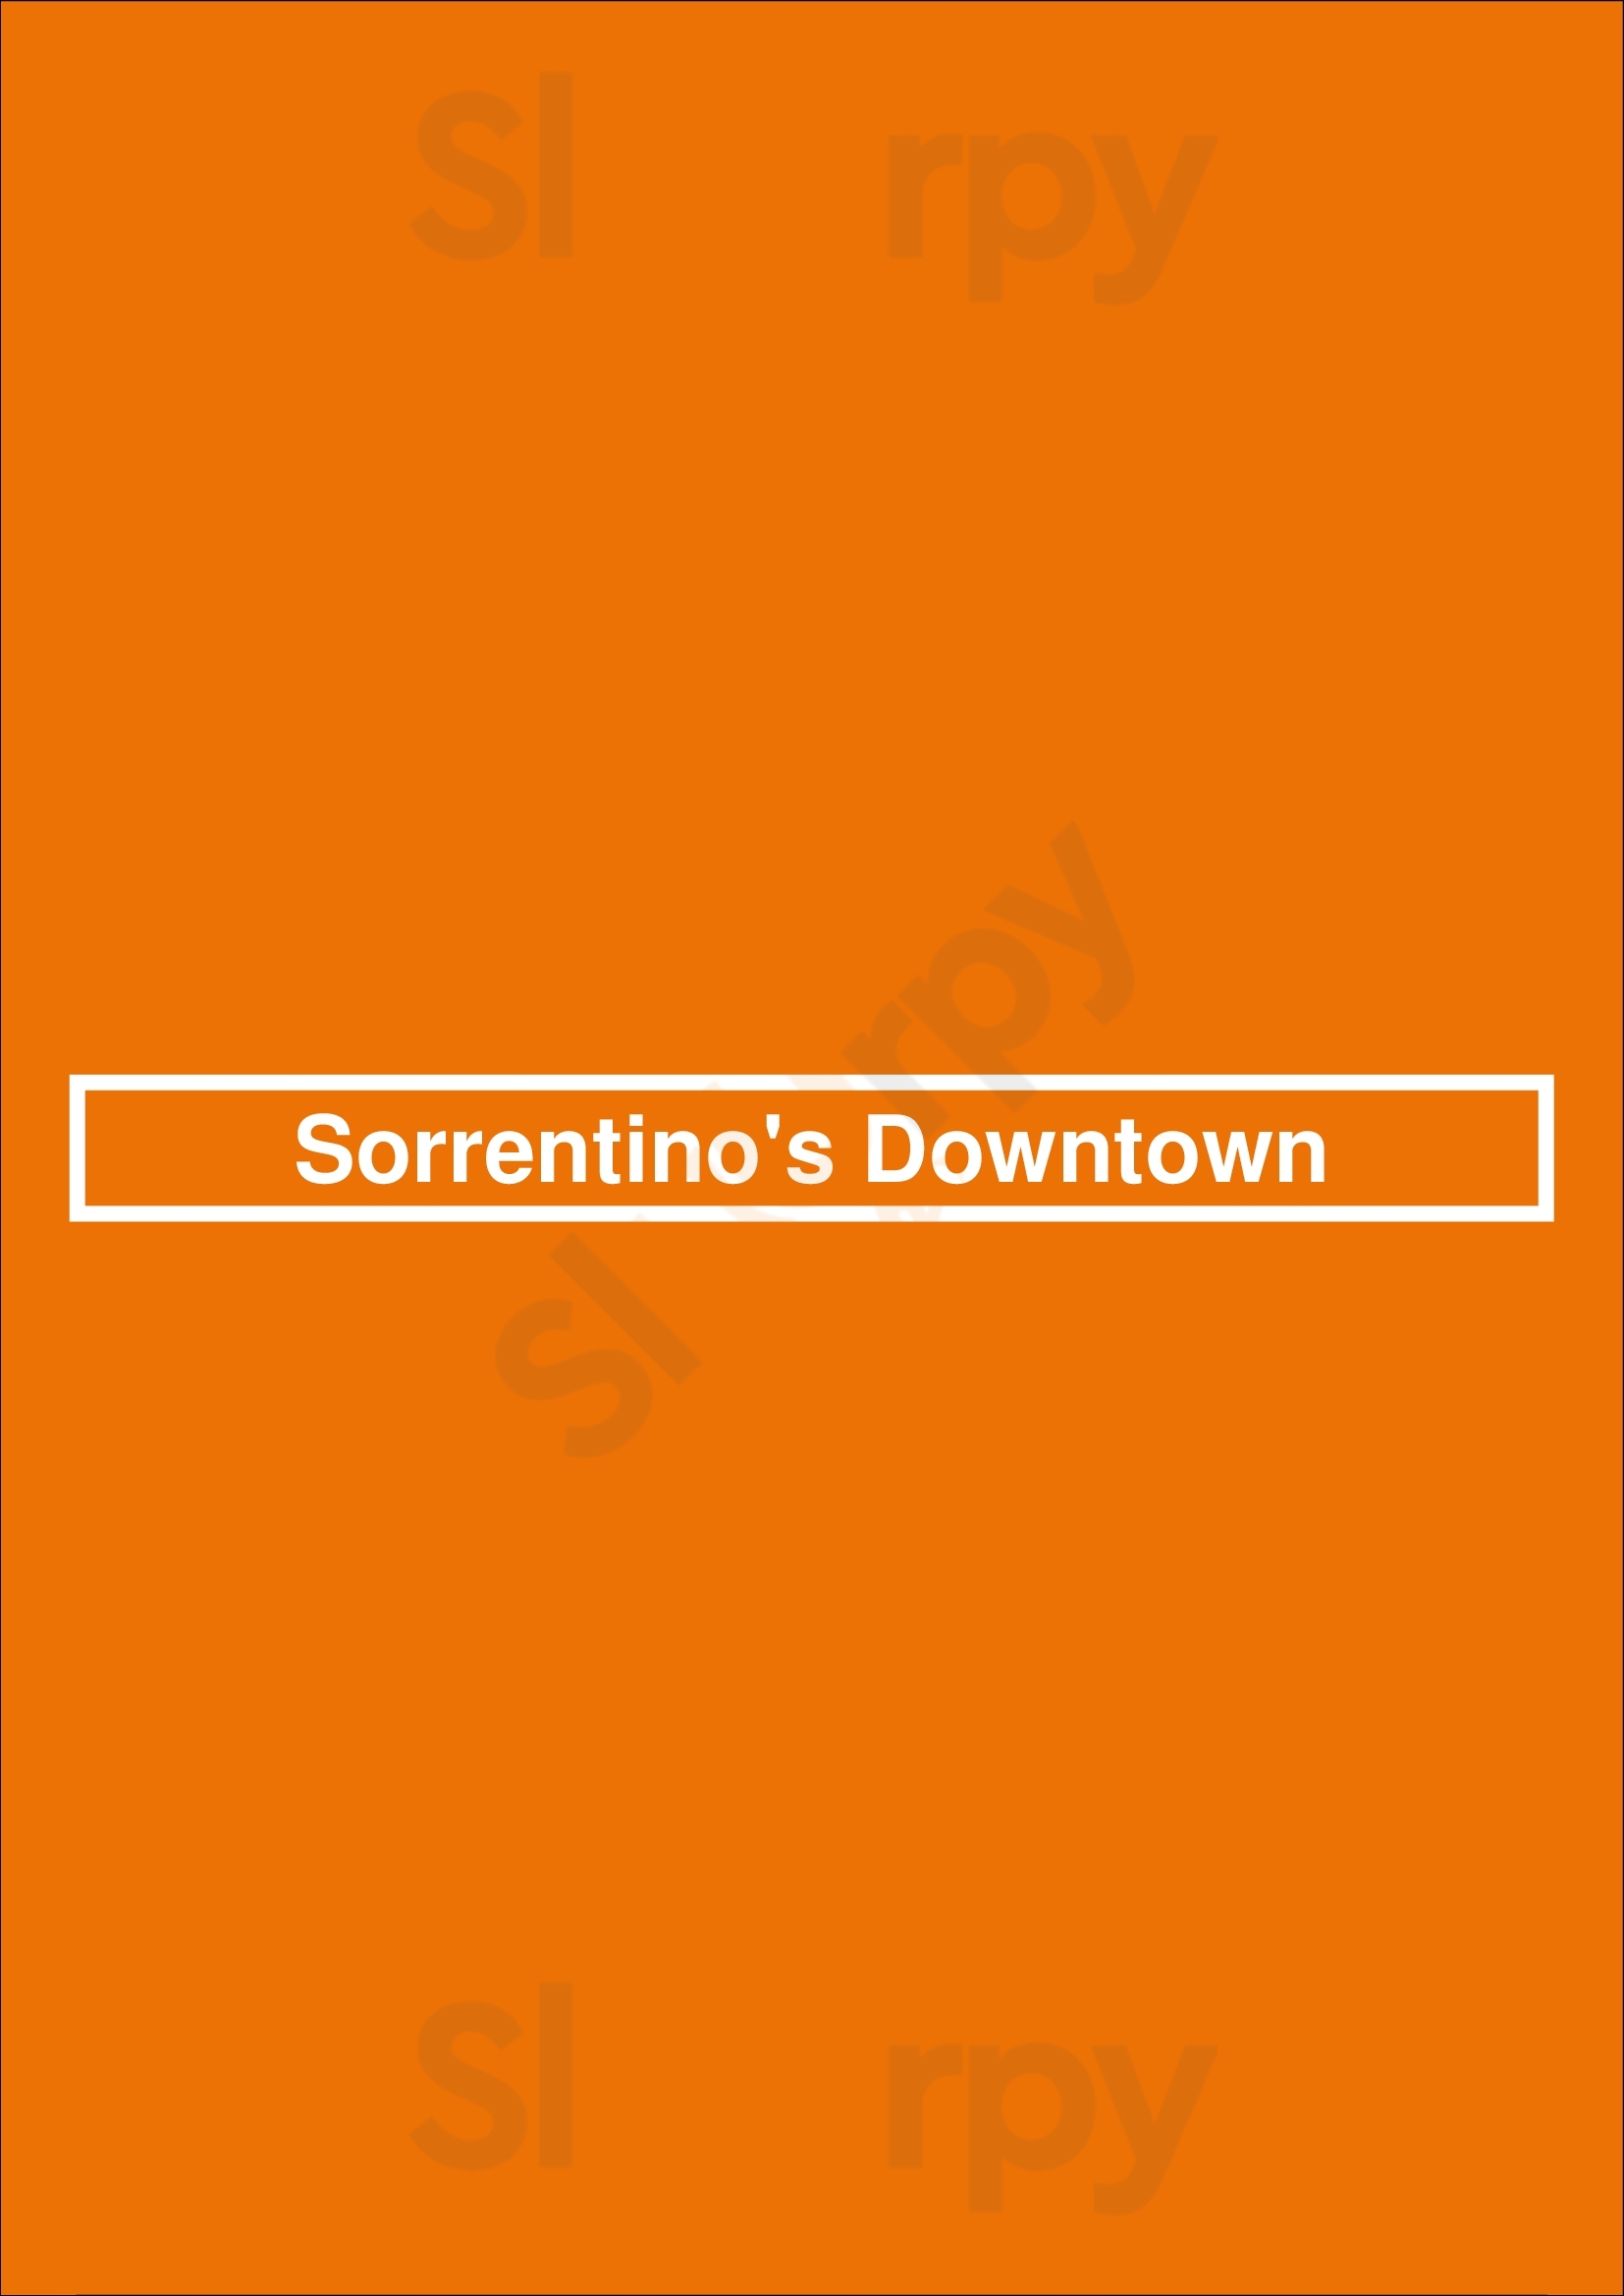 Sorrentino's Downtown Edmonton Menu - 1